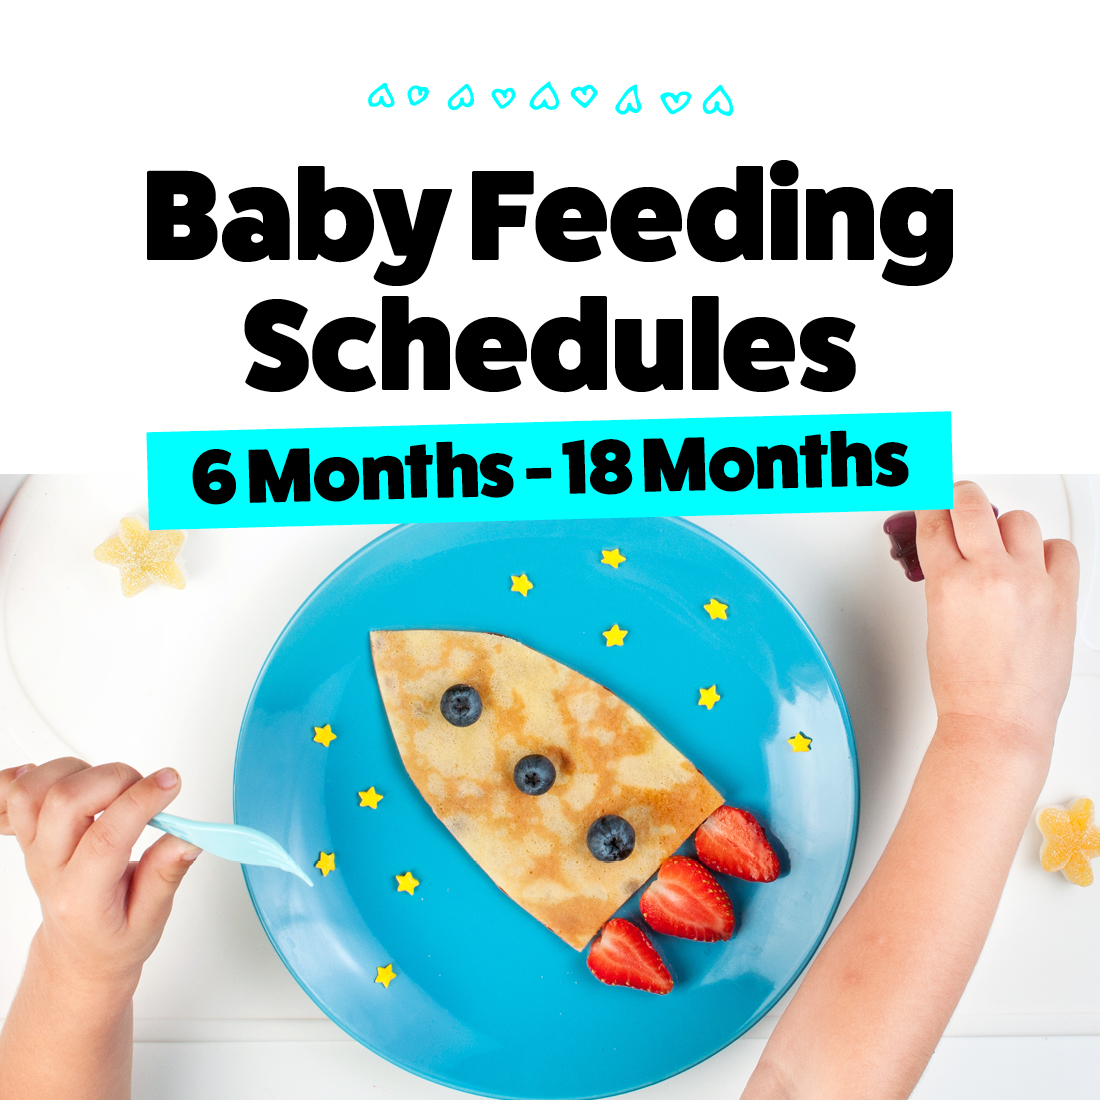 https://www.babyledfeeding.com/wp-content/uploads/2023/02/Baby-Feeding-Schedule-Featured-Image-2022-2.jpg